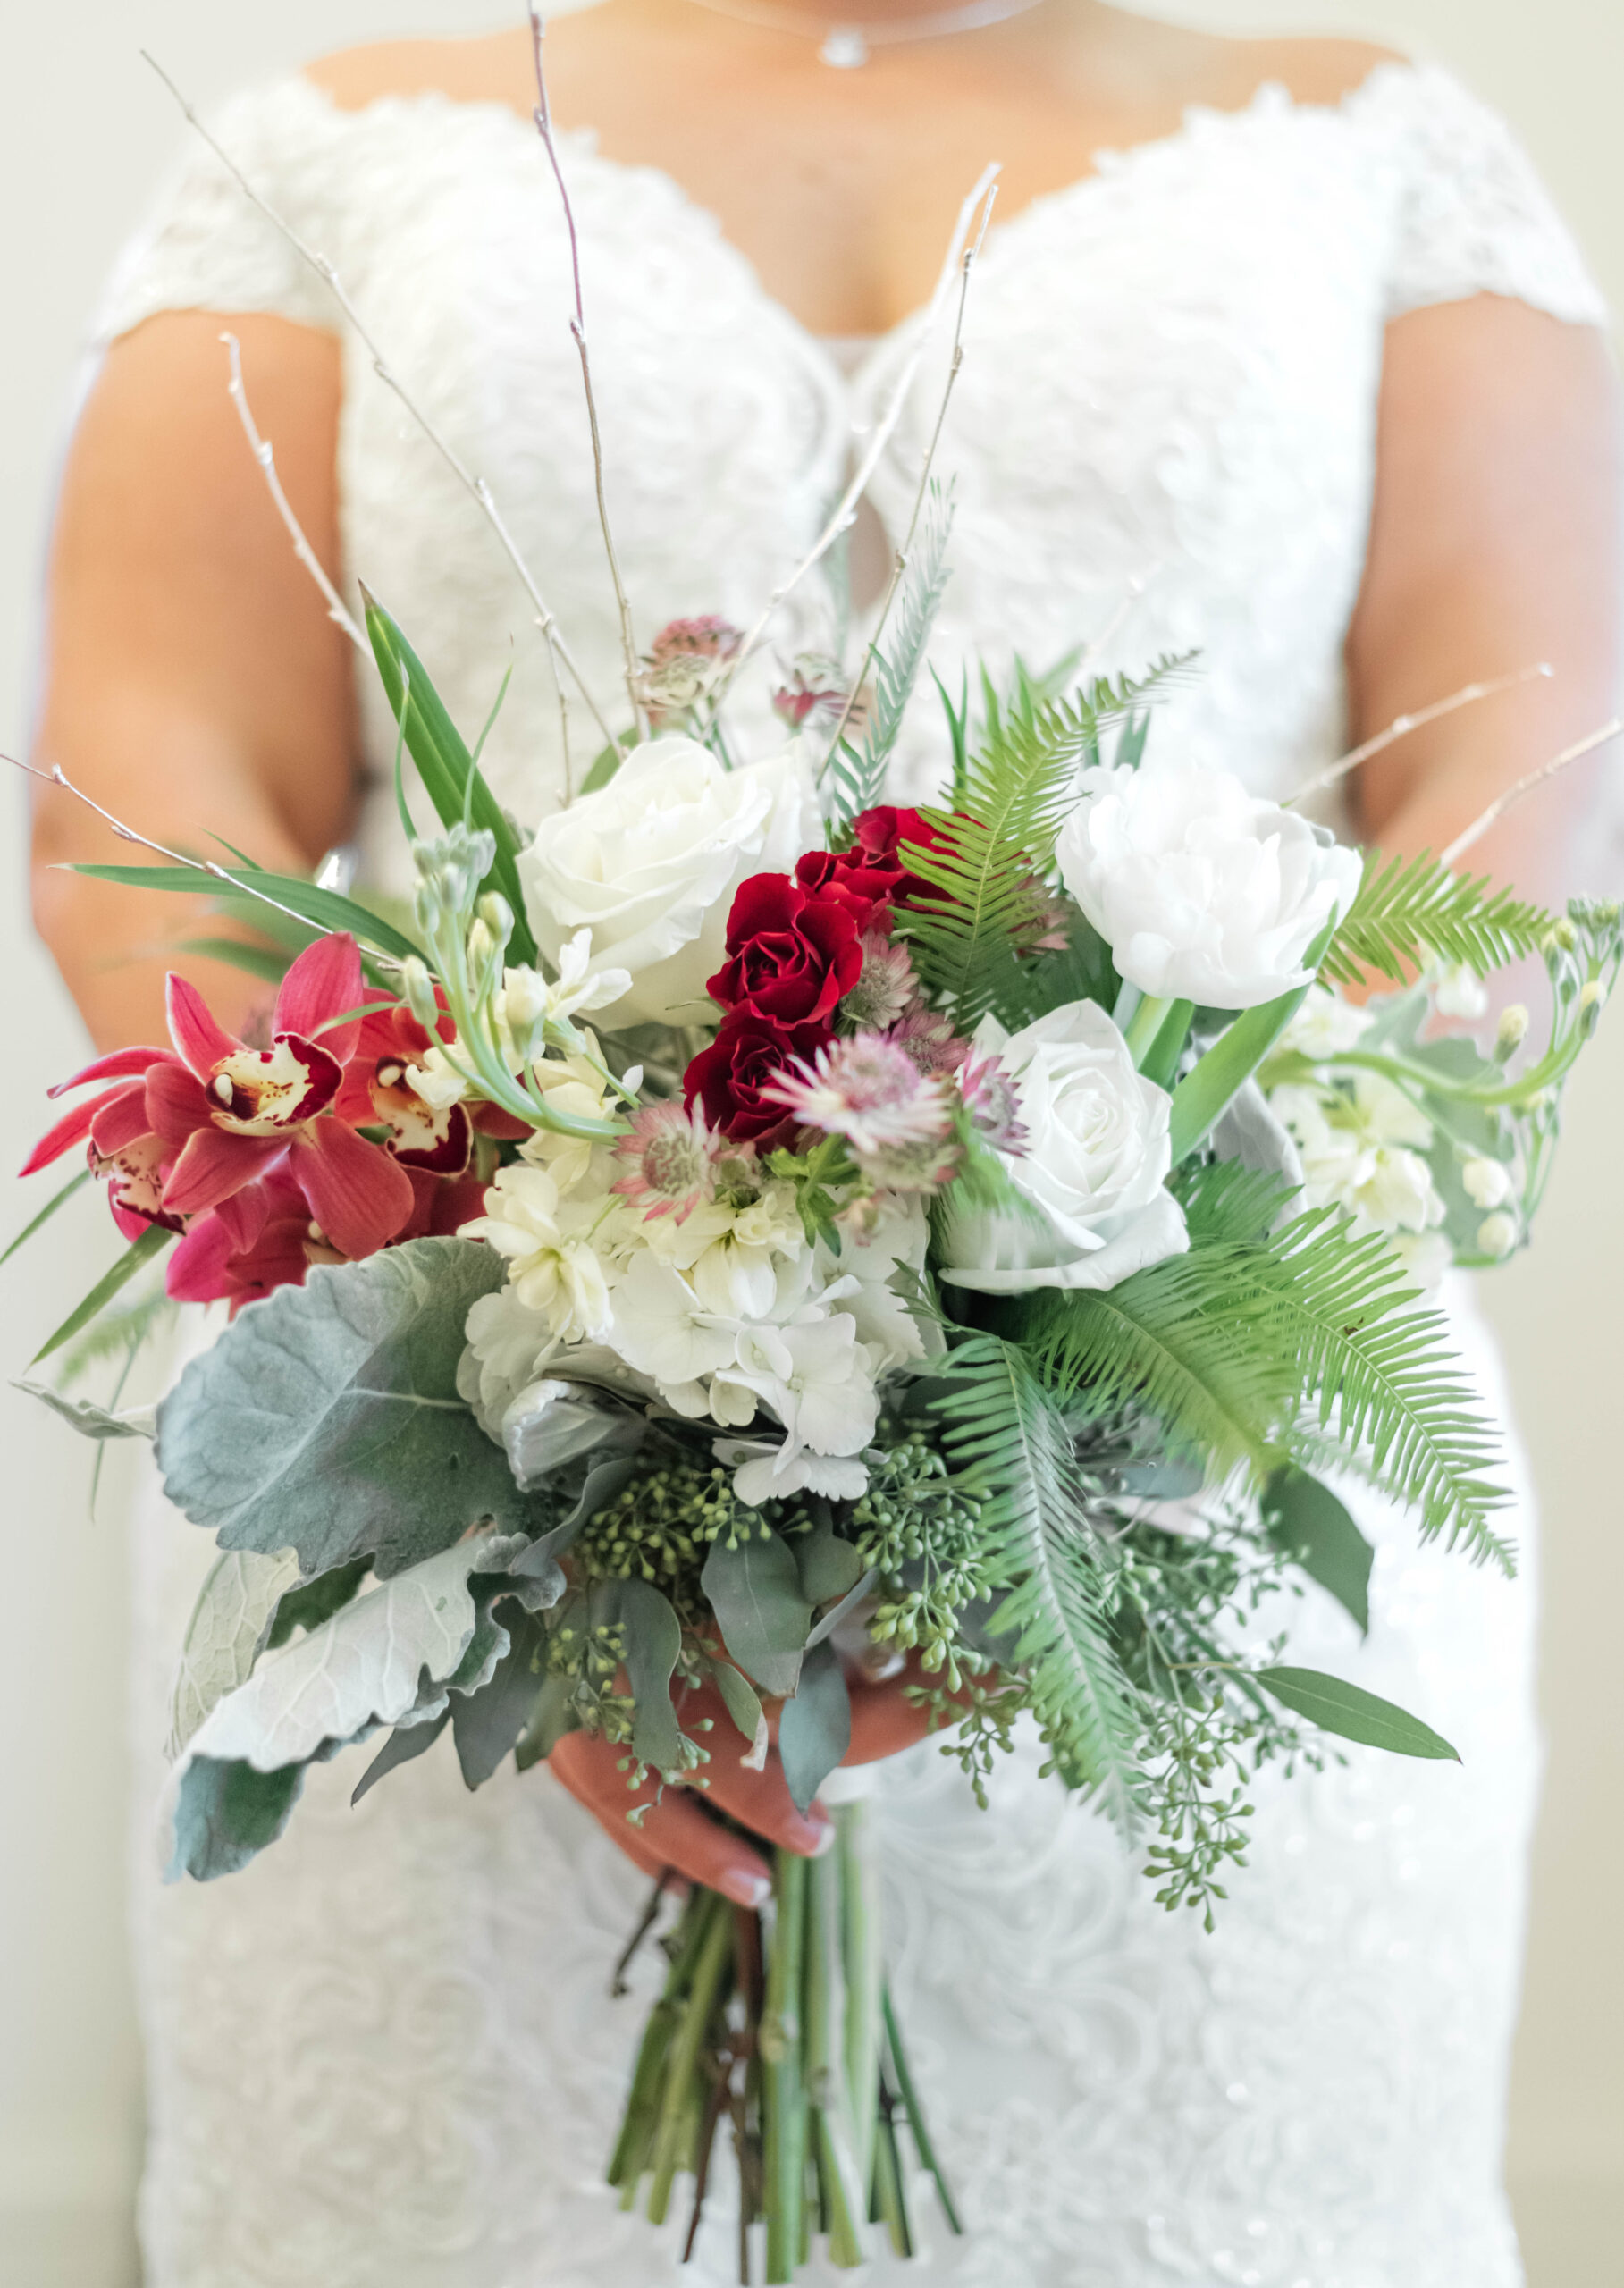 A bride holding a bouquet against her wedding dress.